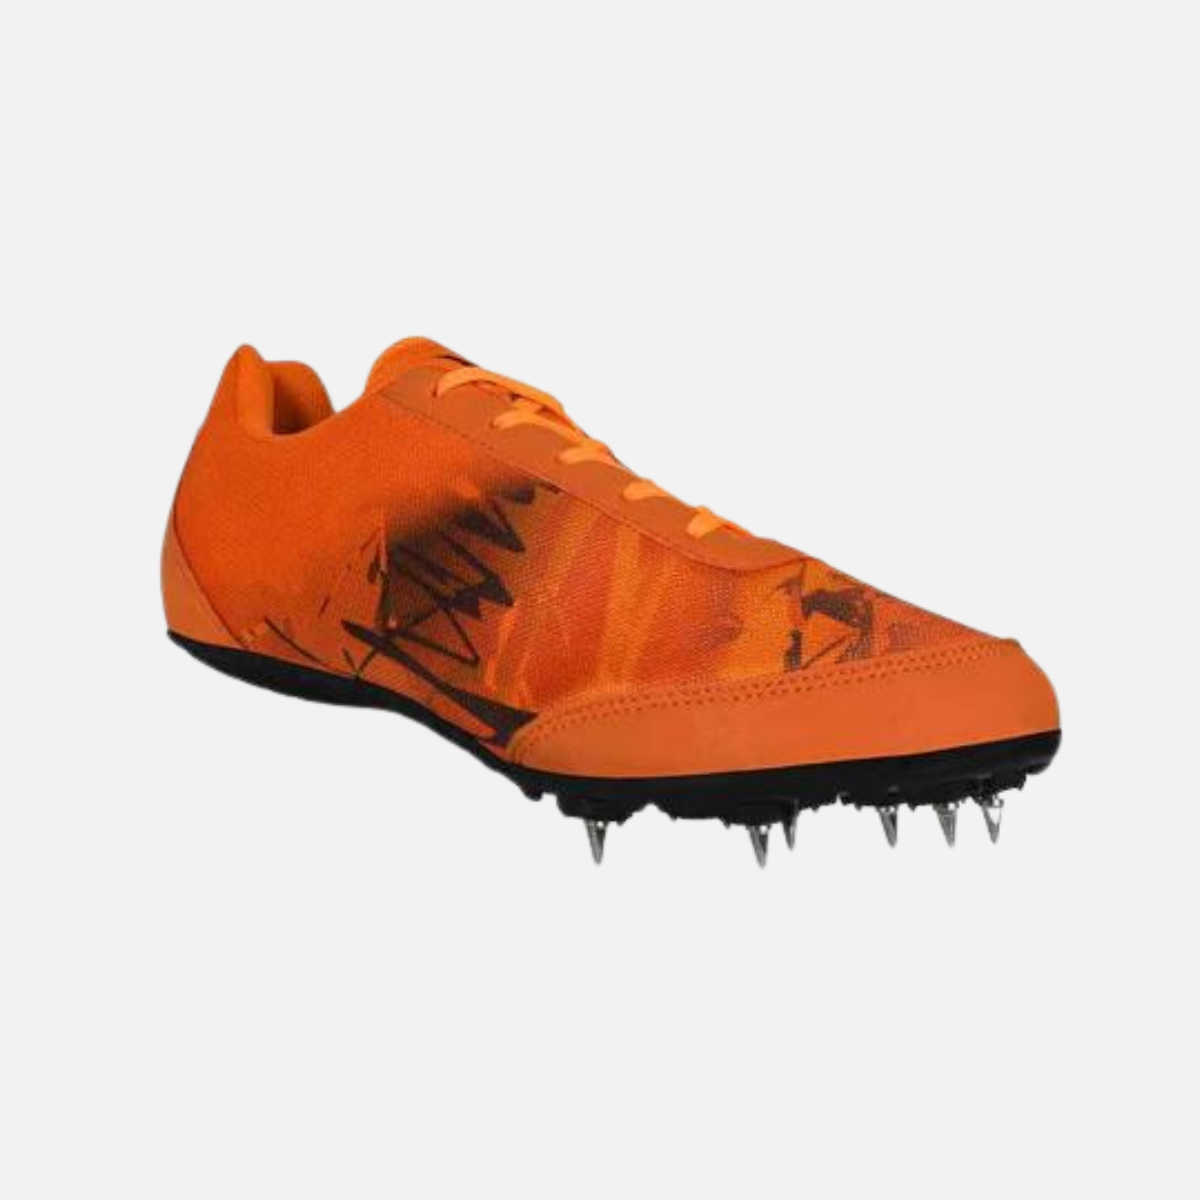 NIVIA Zion-1 Spikes Running Athletic Men's Shoes -Orange